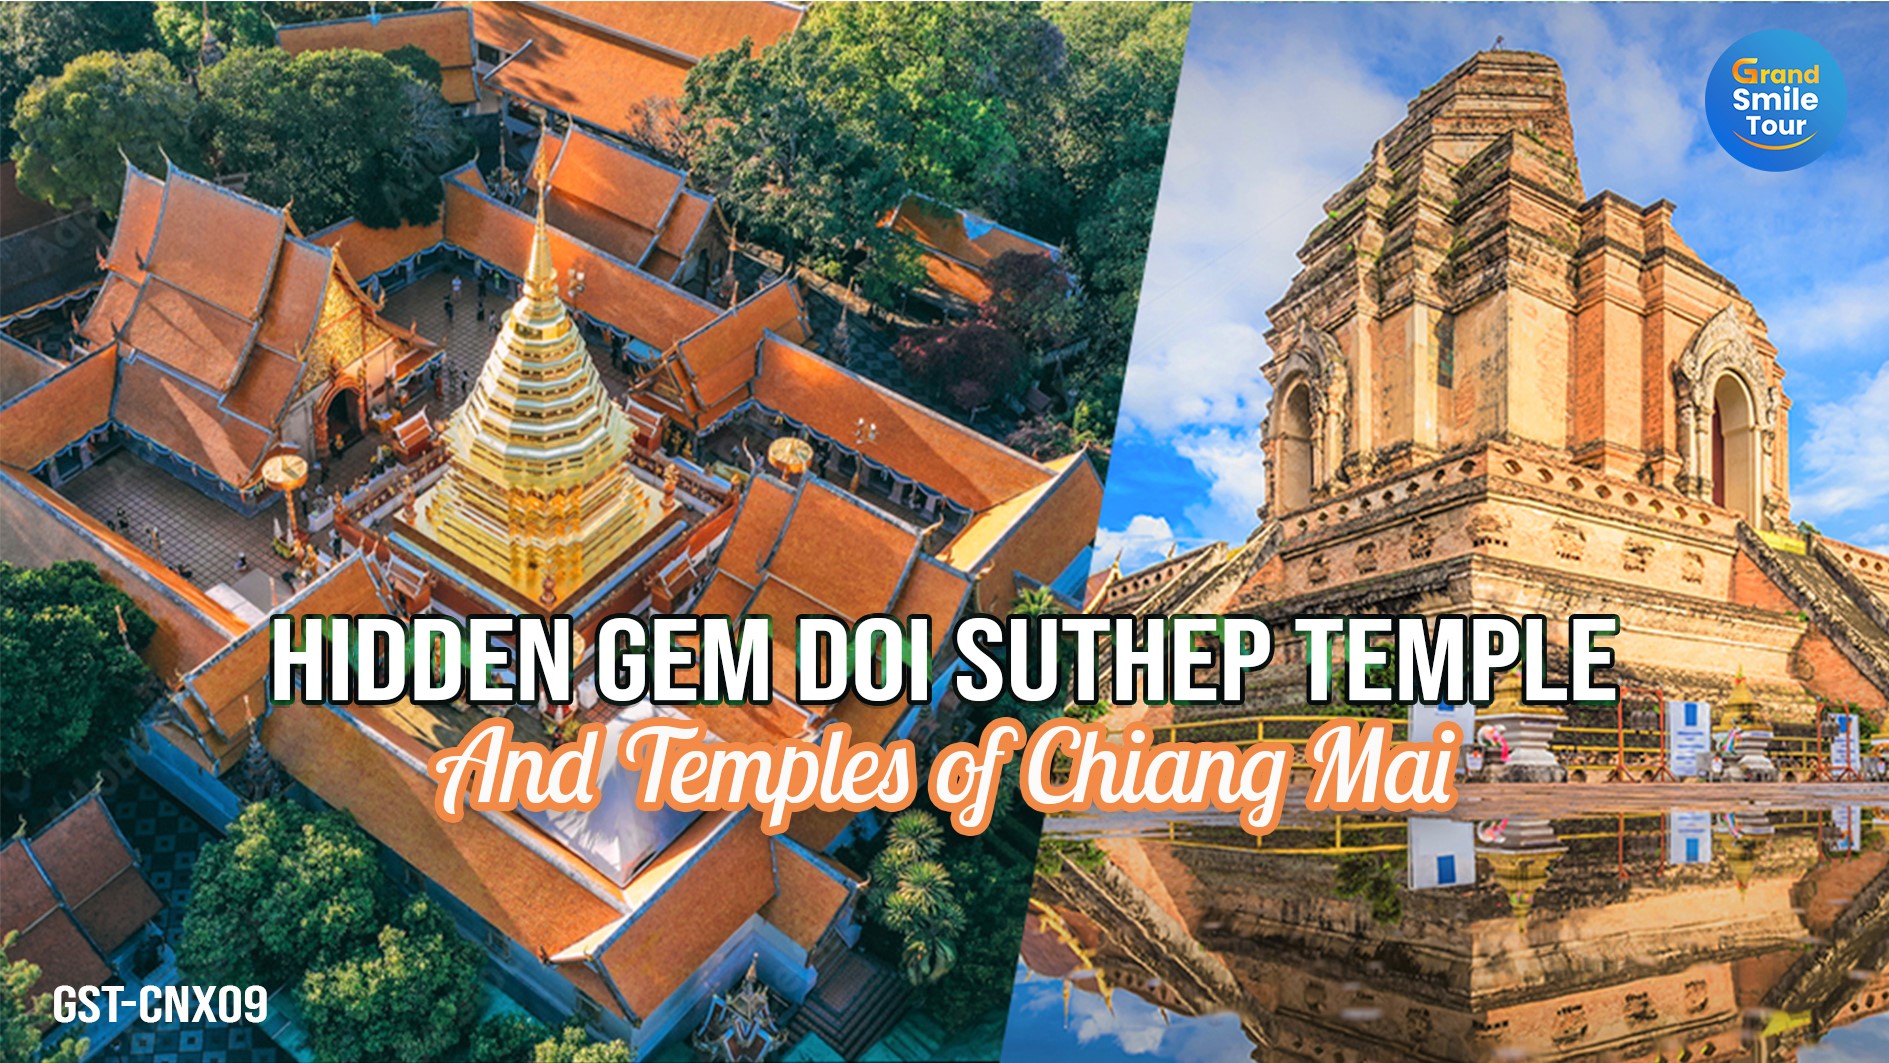 GST-CNX09 Full Day Tour - Hidden Gem Doi Suthep & Temples of Chiang Mai